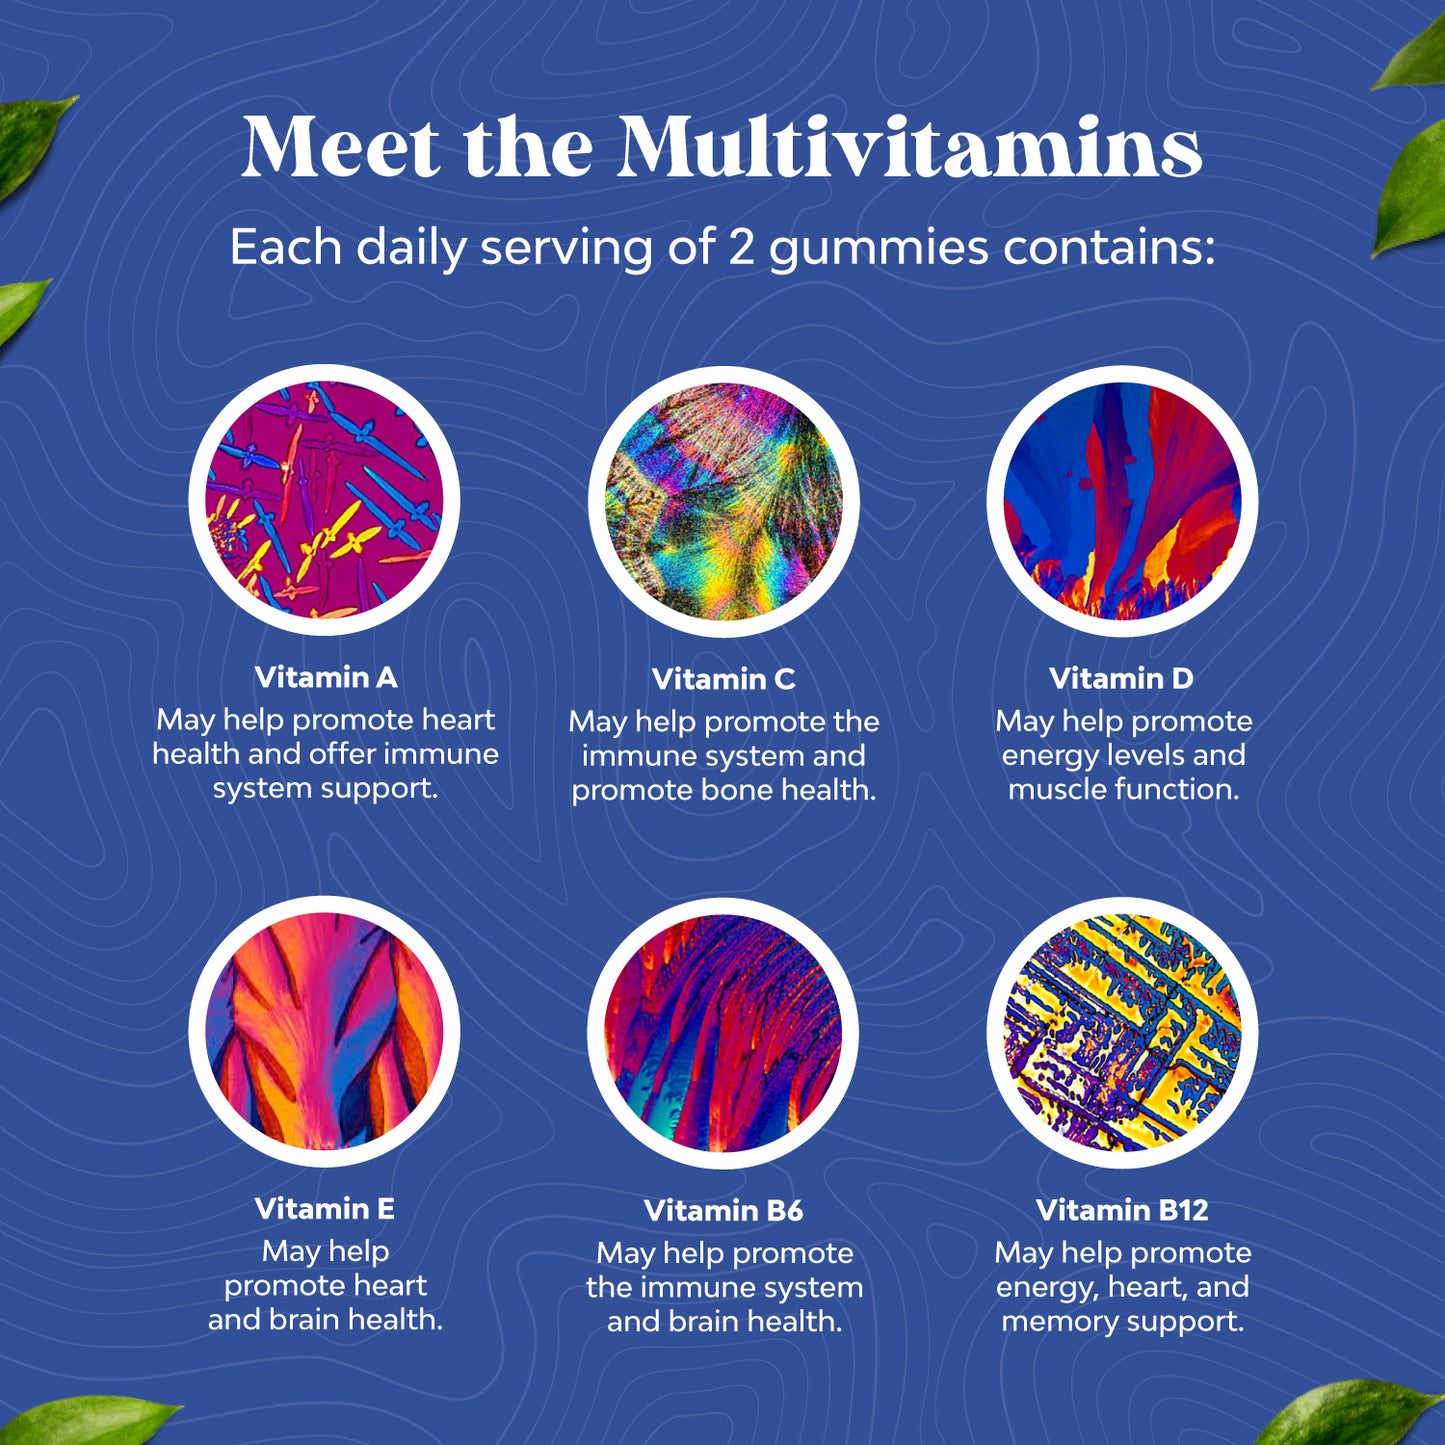 Men's Multivitamin Gummies - 90 Gummies